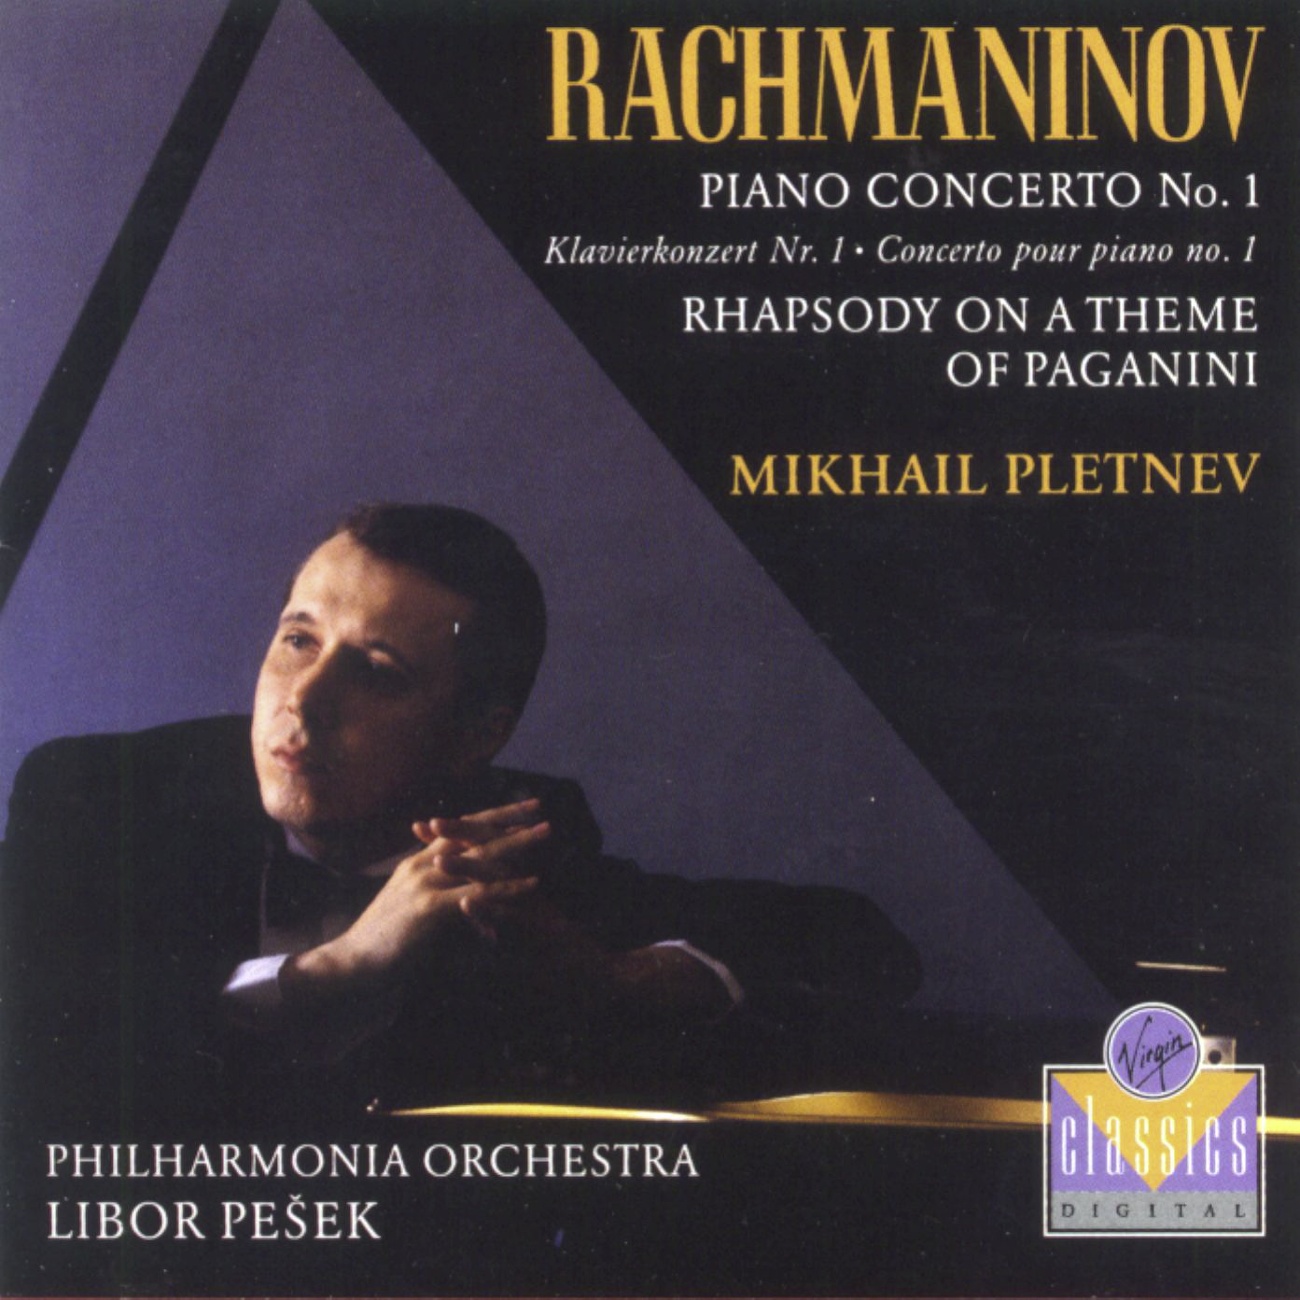 Rhapsody on a Theme of Paganini: Variation XII - Tempo di Minuetto